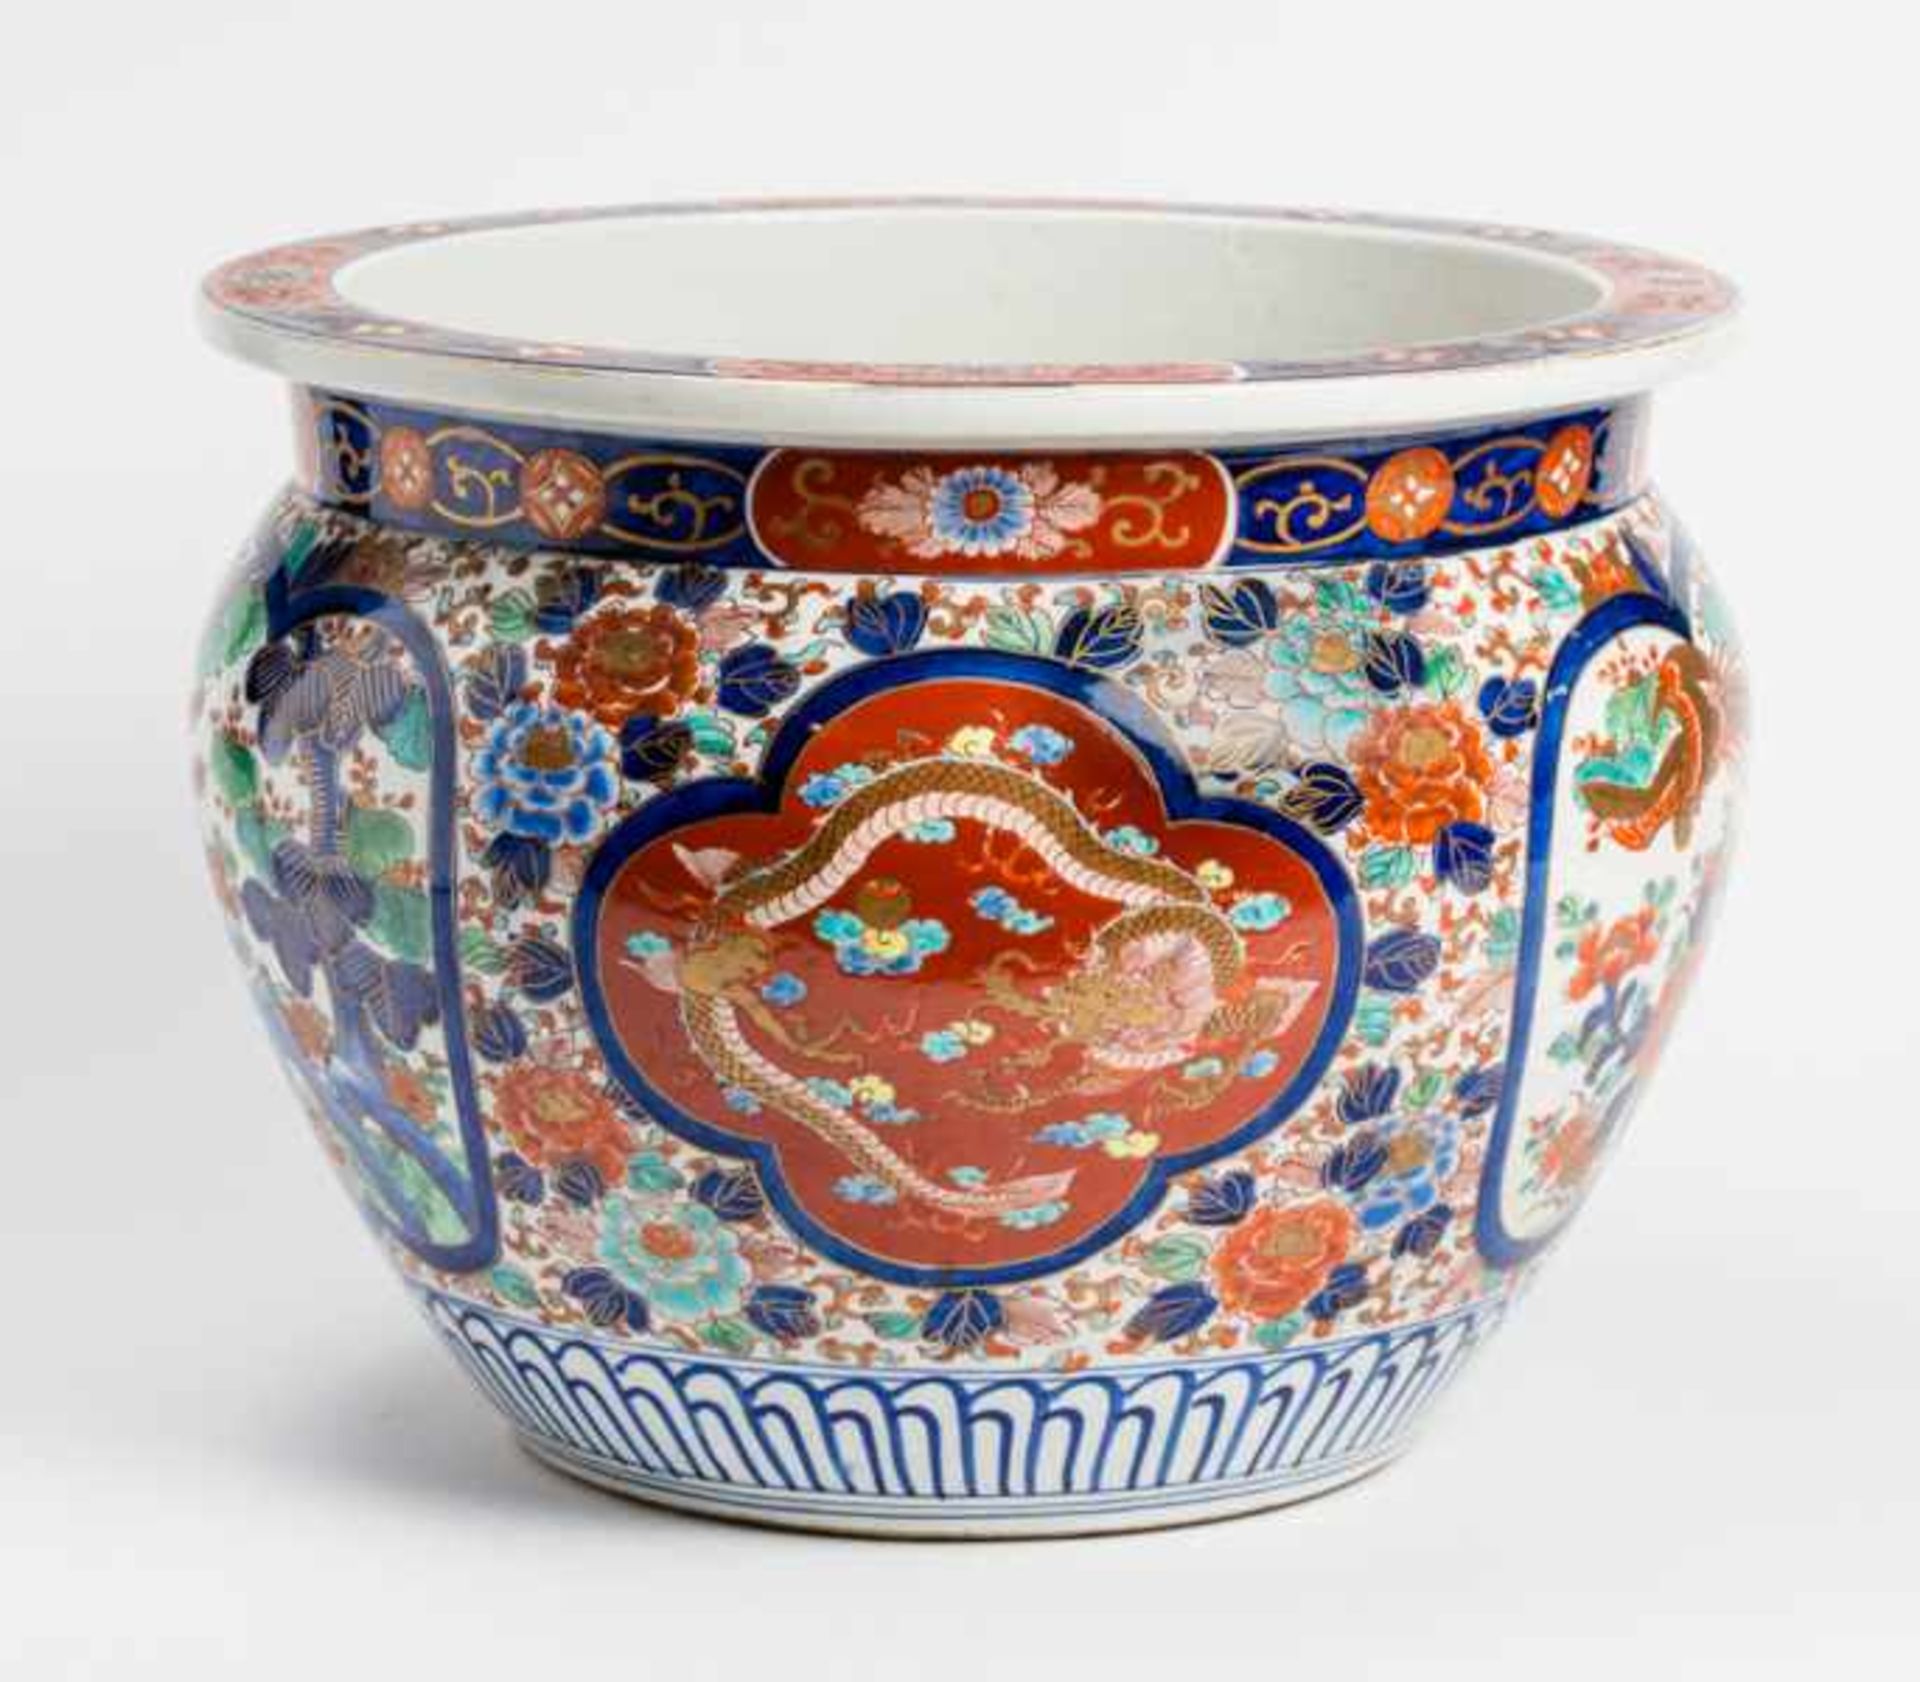 AN ELABORATELY ADORNED IMARI CACHEPOT Porcelain with enamel painting. Japan, Meiji period around